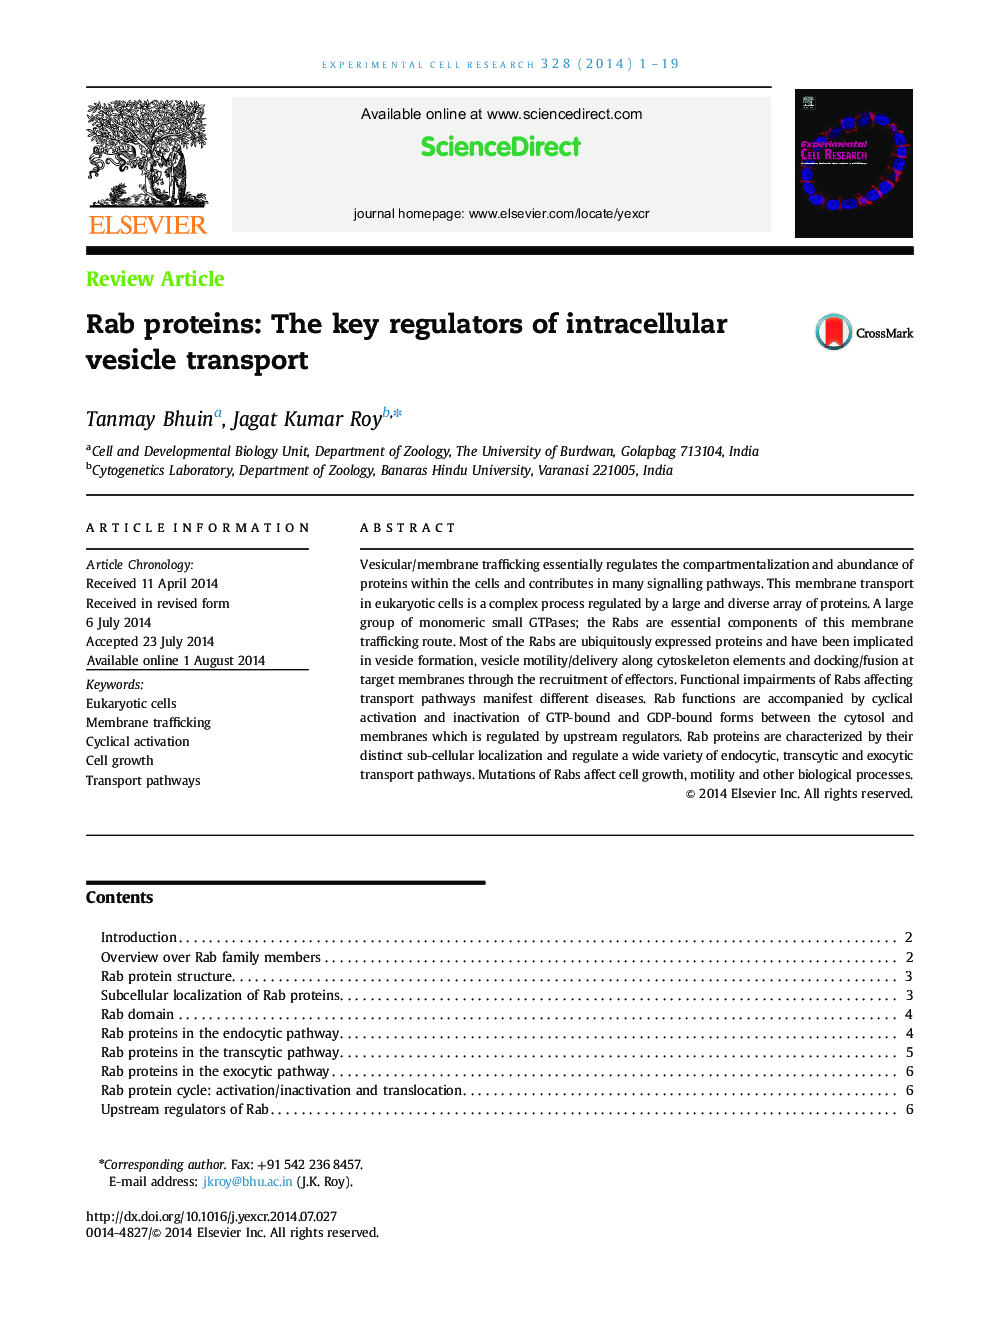 Rab proteins: The key regulators of intracellular vesicle transport